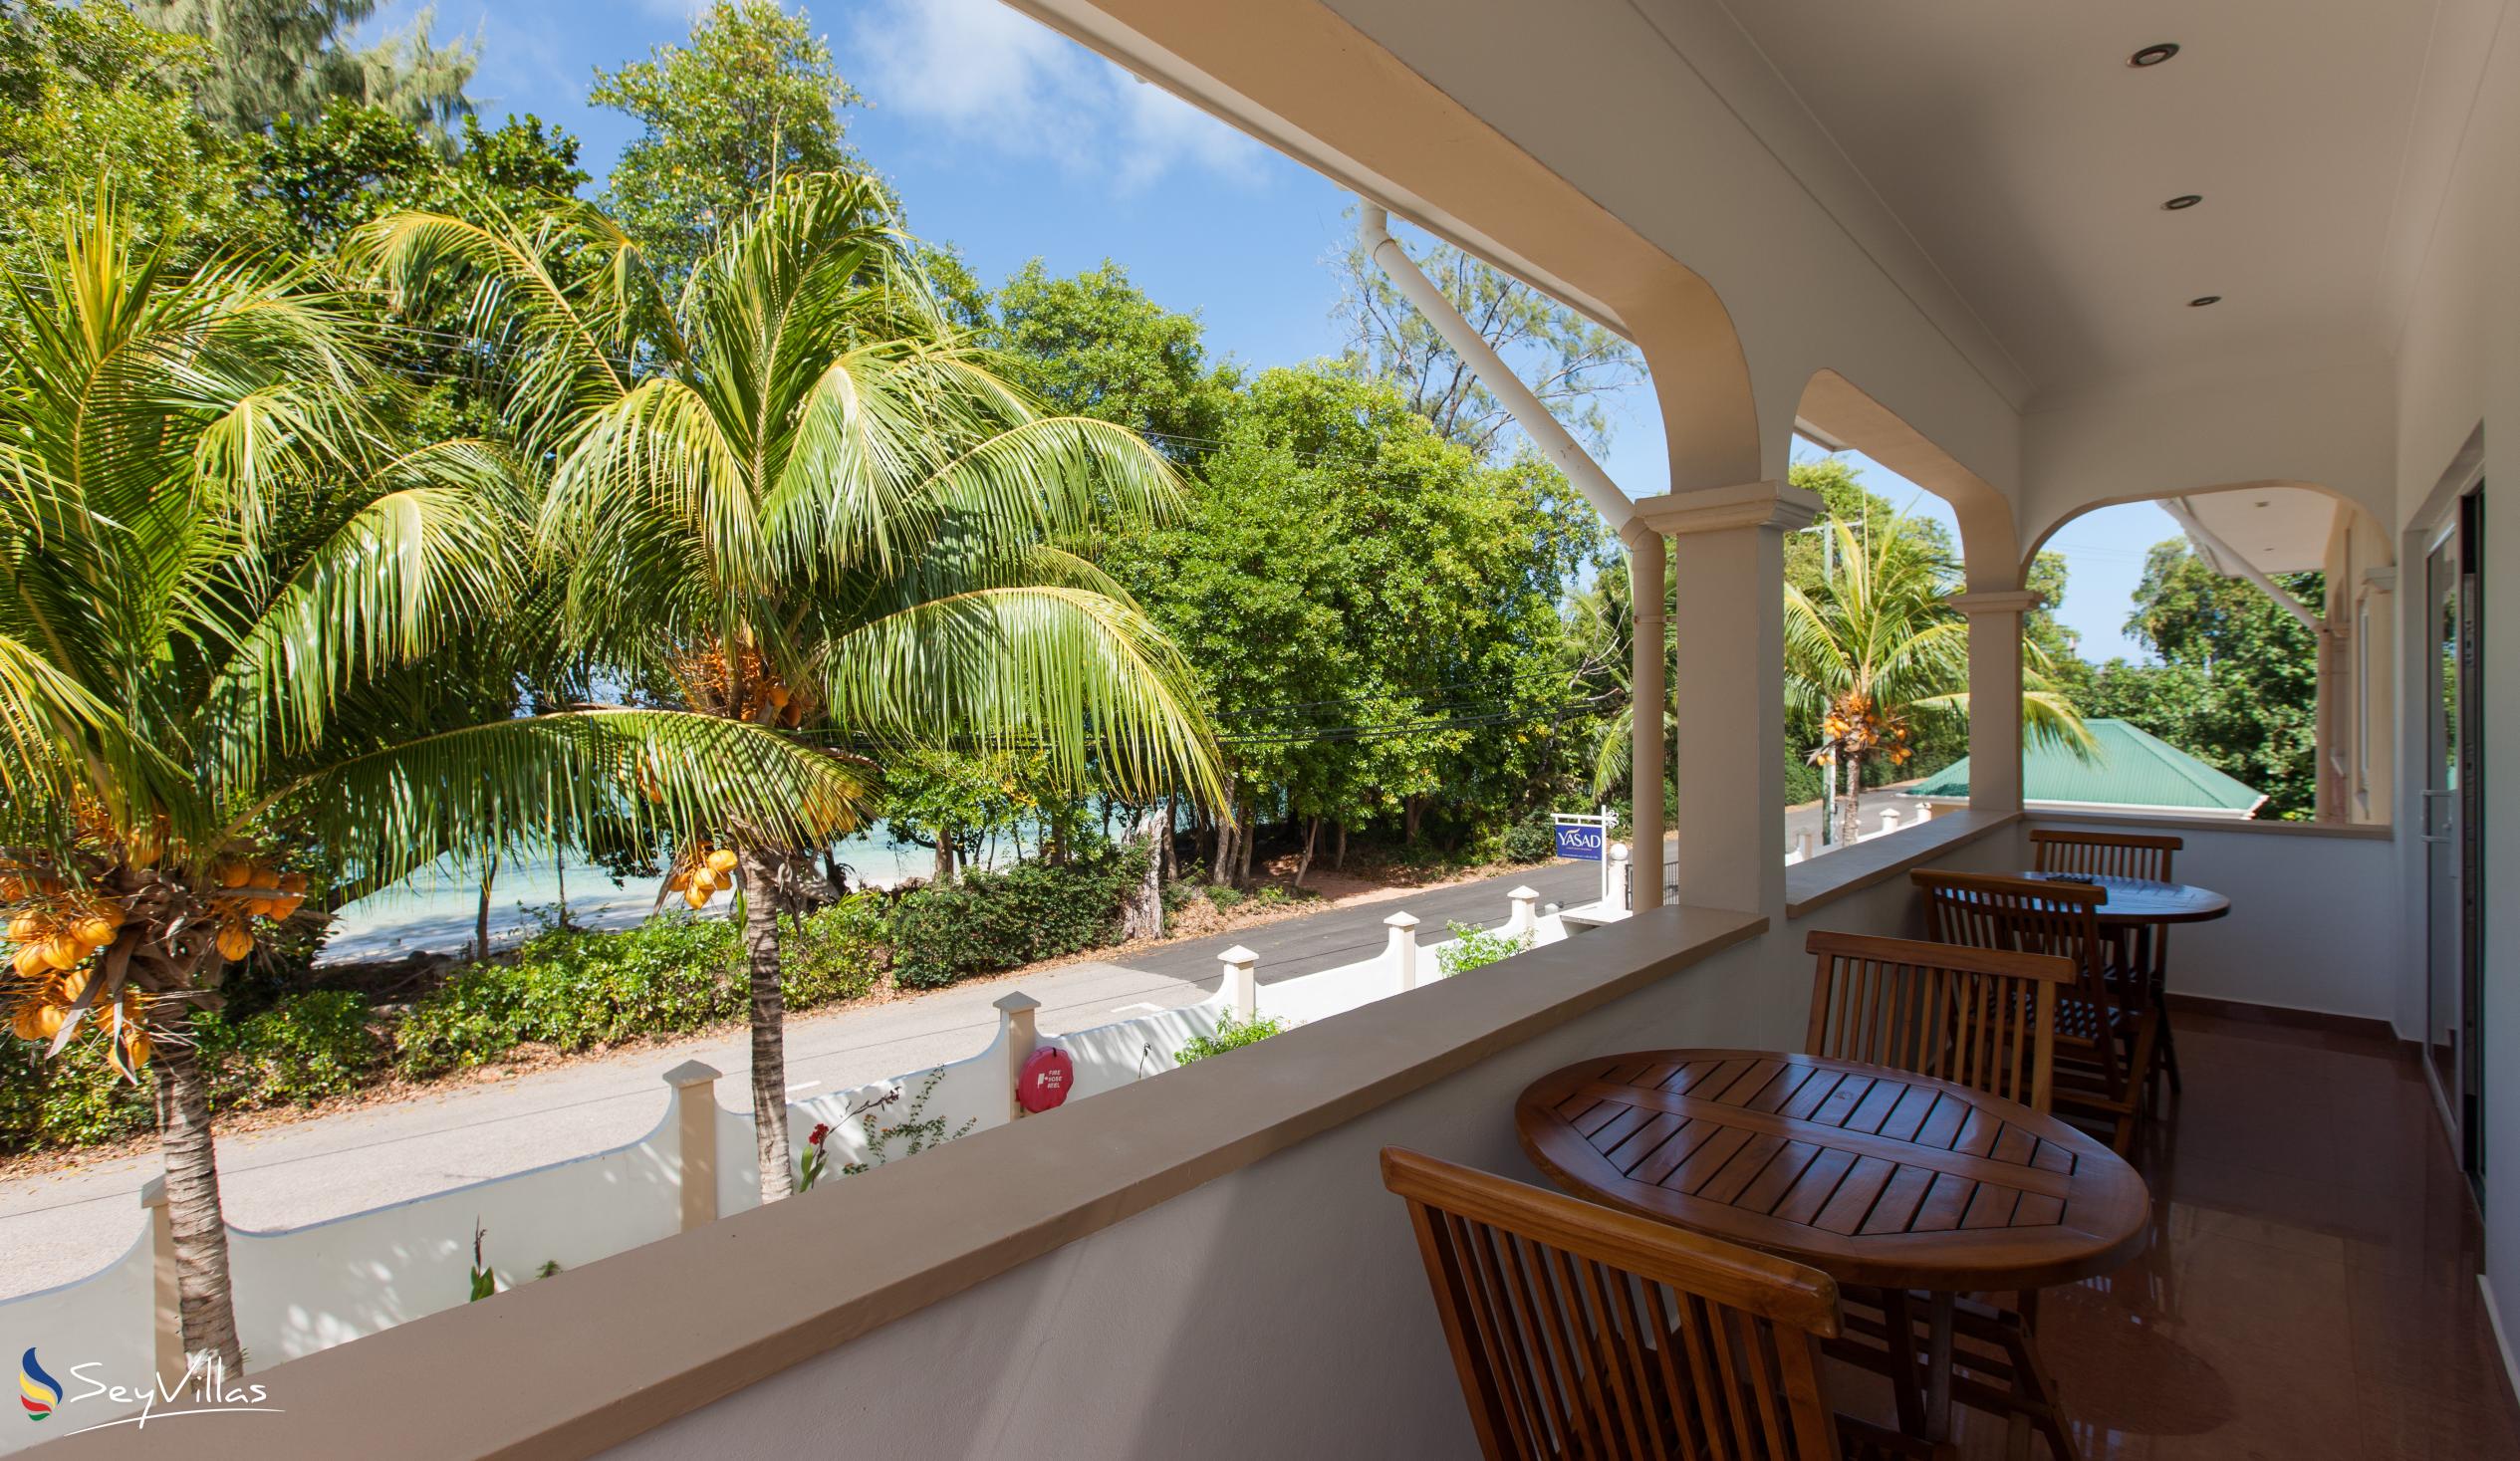 Foto 8: YASAD Luxury Beach Residence - Appartamento con 3 camere da letto - Praslin (Seychelles)